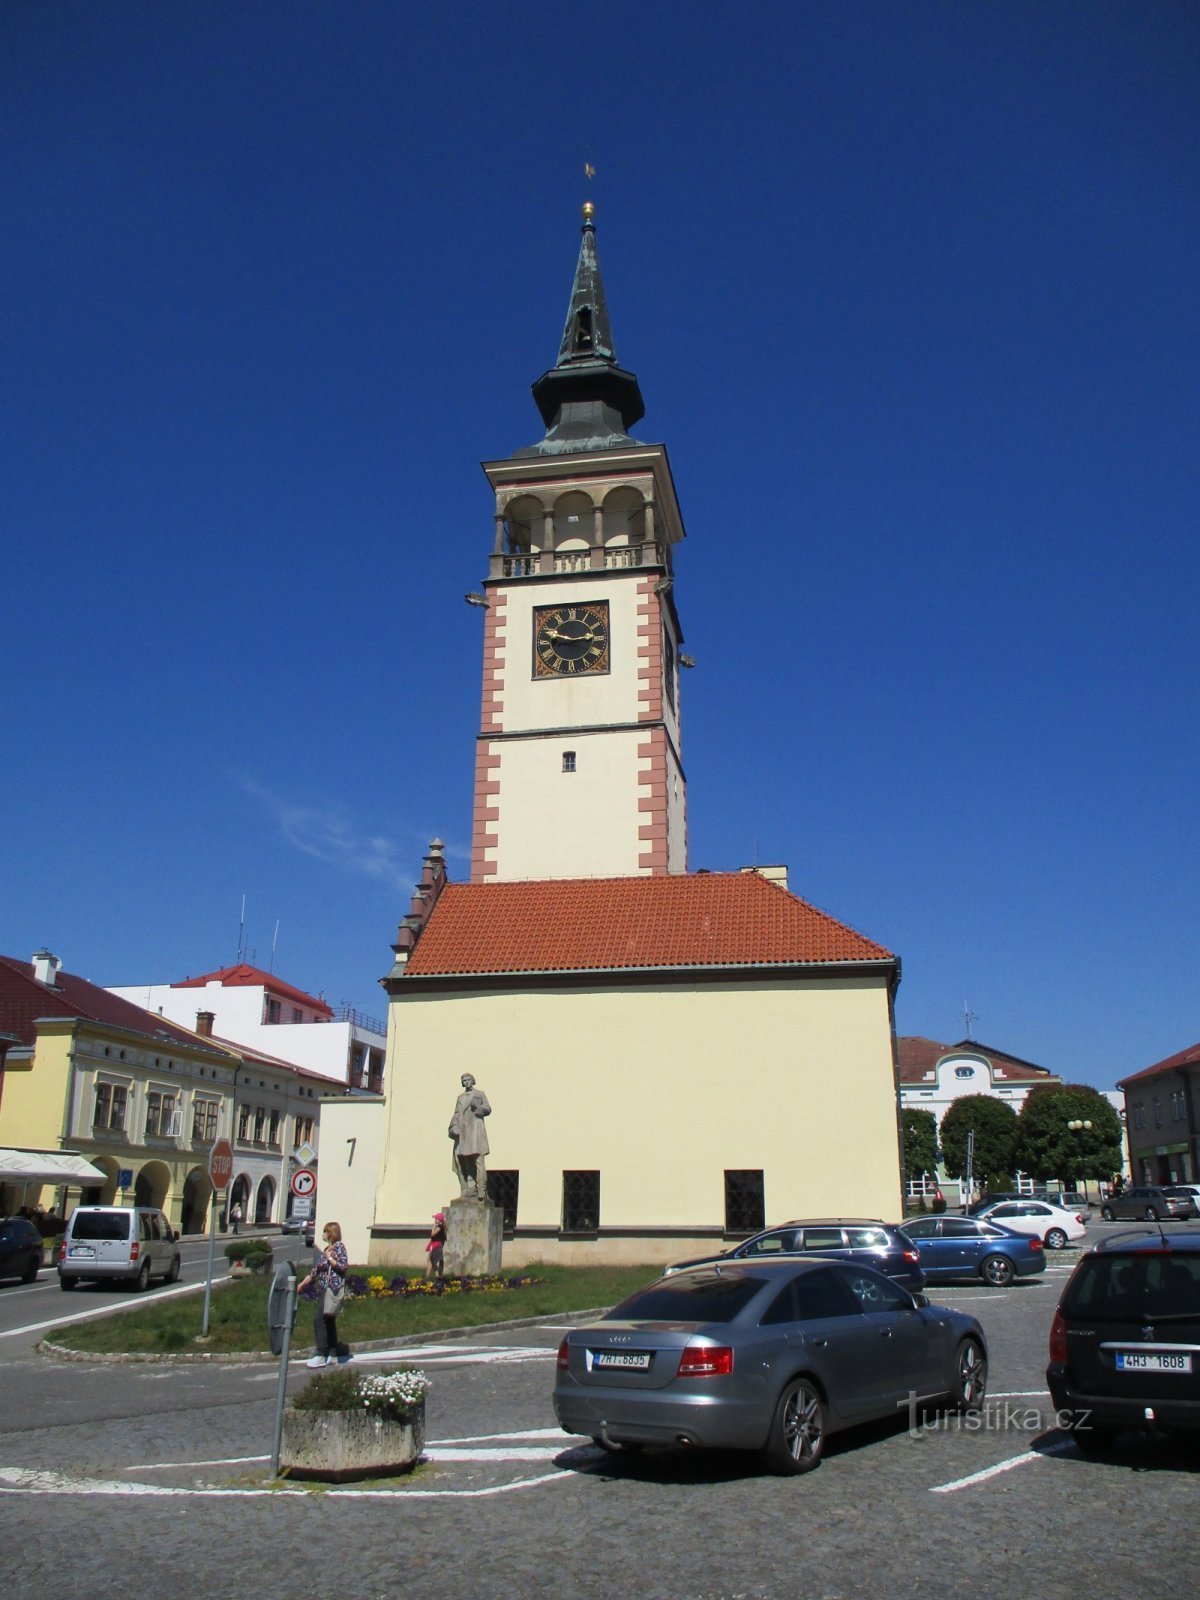 Torre da Câmara Municipal (Dobruška, 18.5.2020/XNUMX/XNUMX)